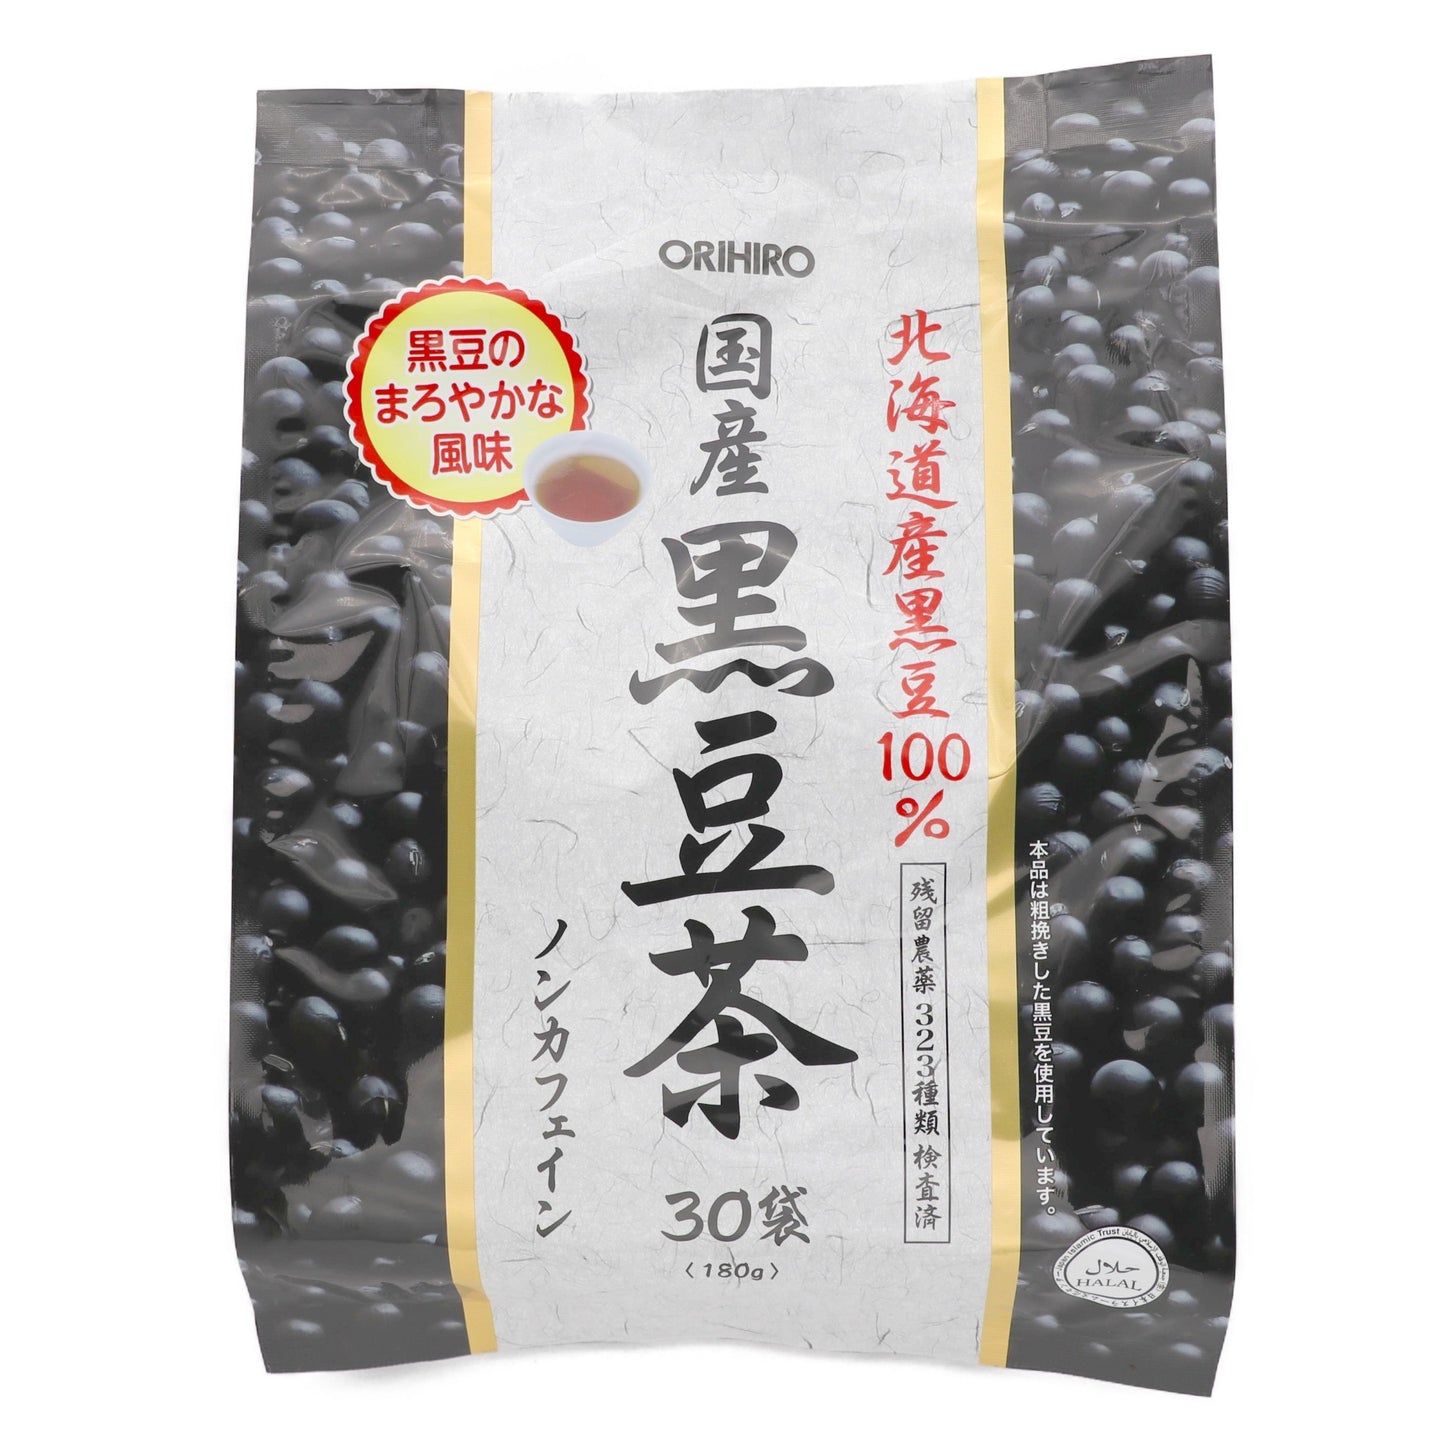 ORIHIRO 100%國產黑豆茶 30包